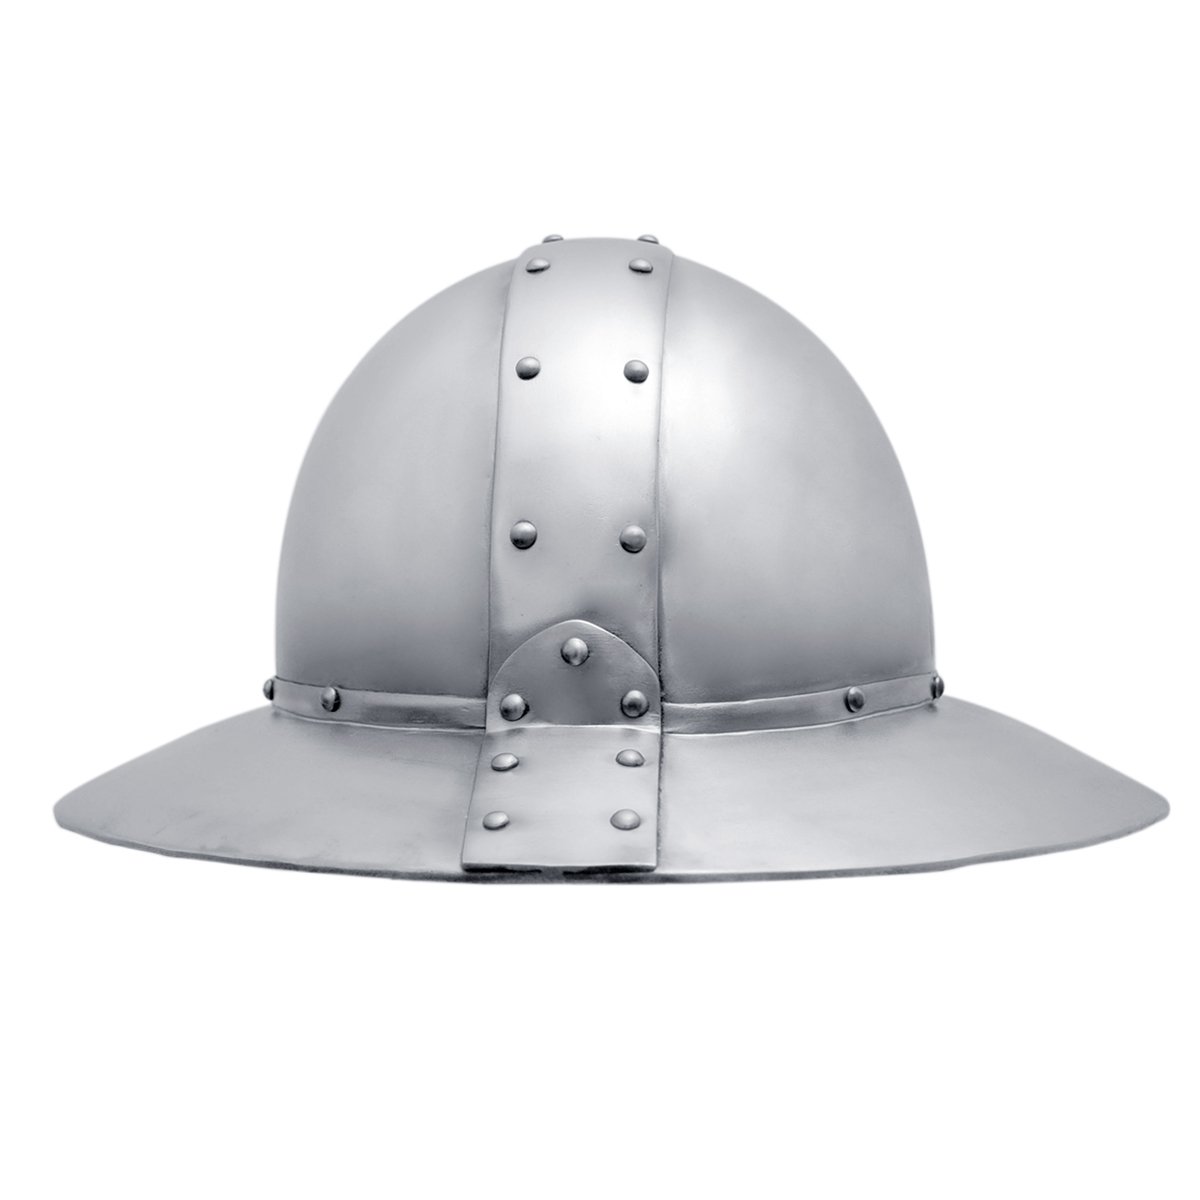 XIII th C Kettle Hat helmet, Size XL